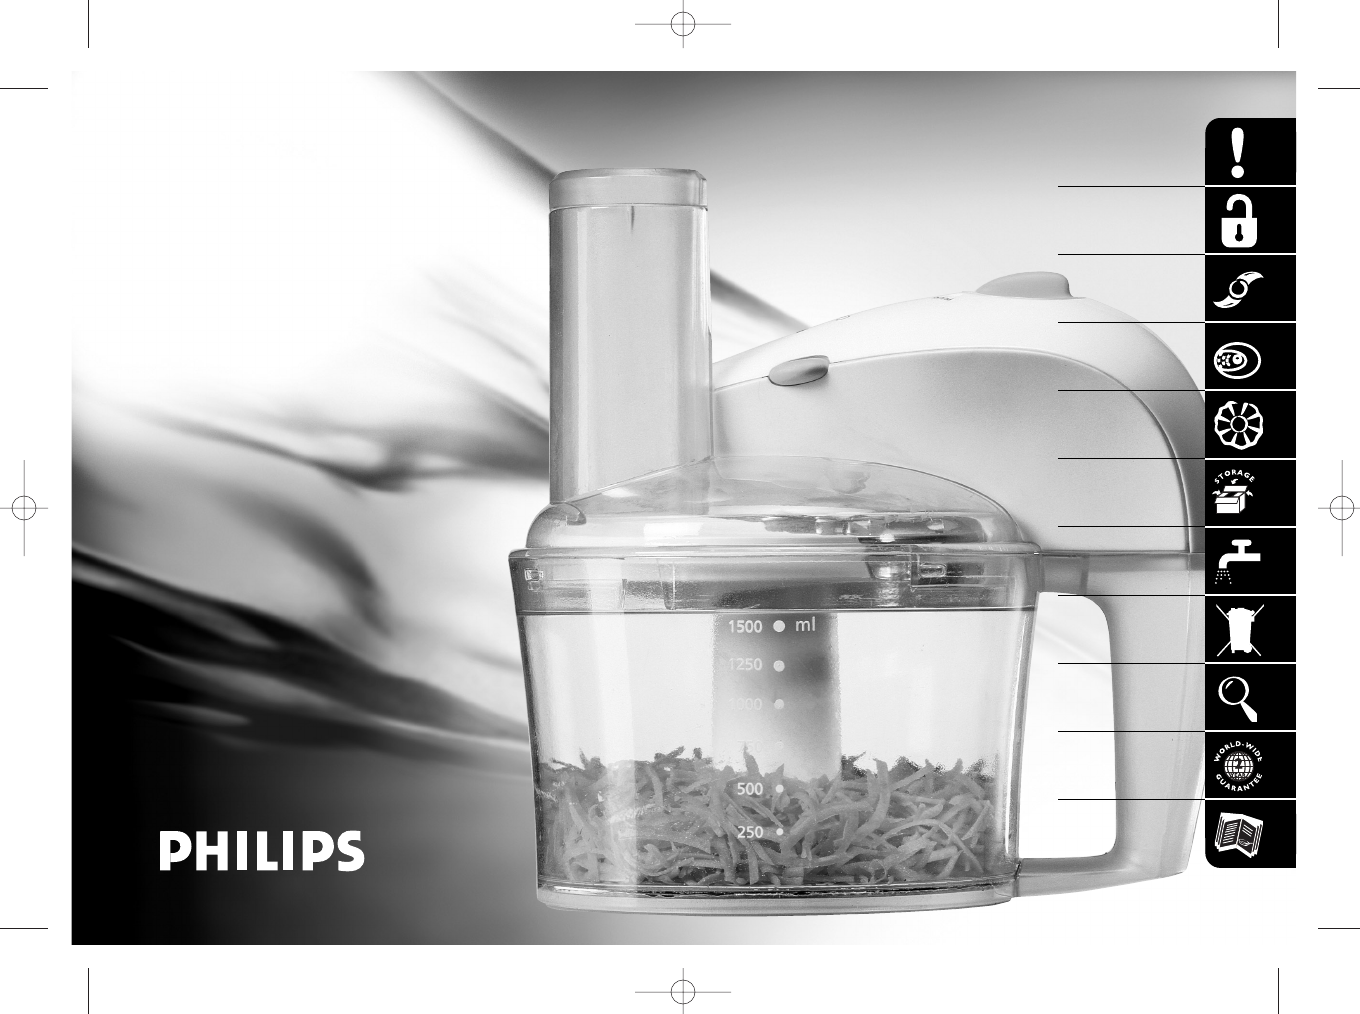 Филипс комфорт. Philips hr7605. Philips Comfort hr7605. Кухонный комбайн Philips 7605. Philips Comfort hr7605 кухонный комбайн.